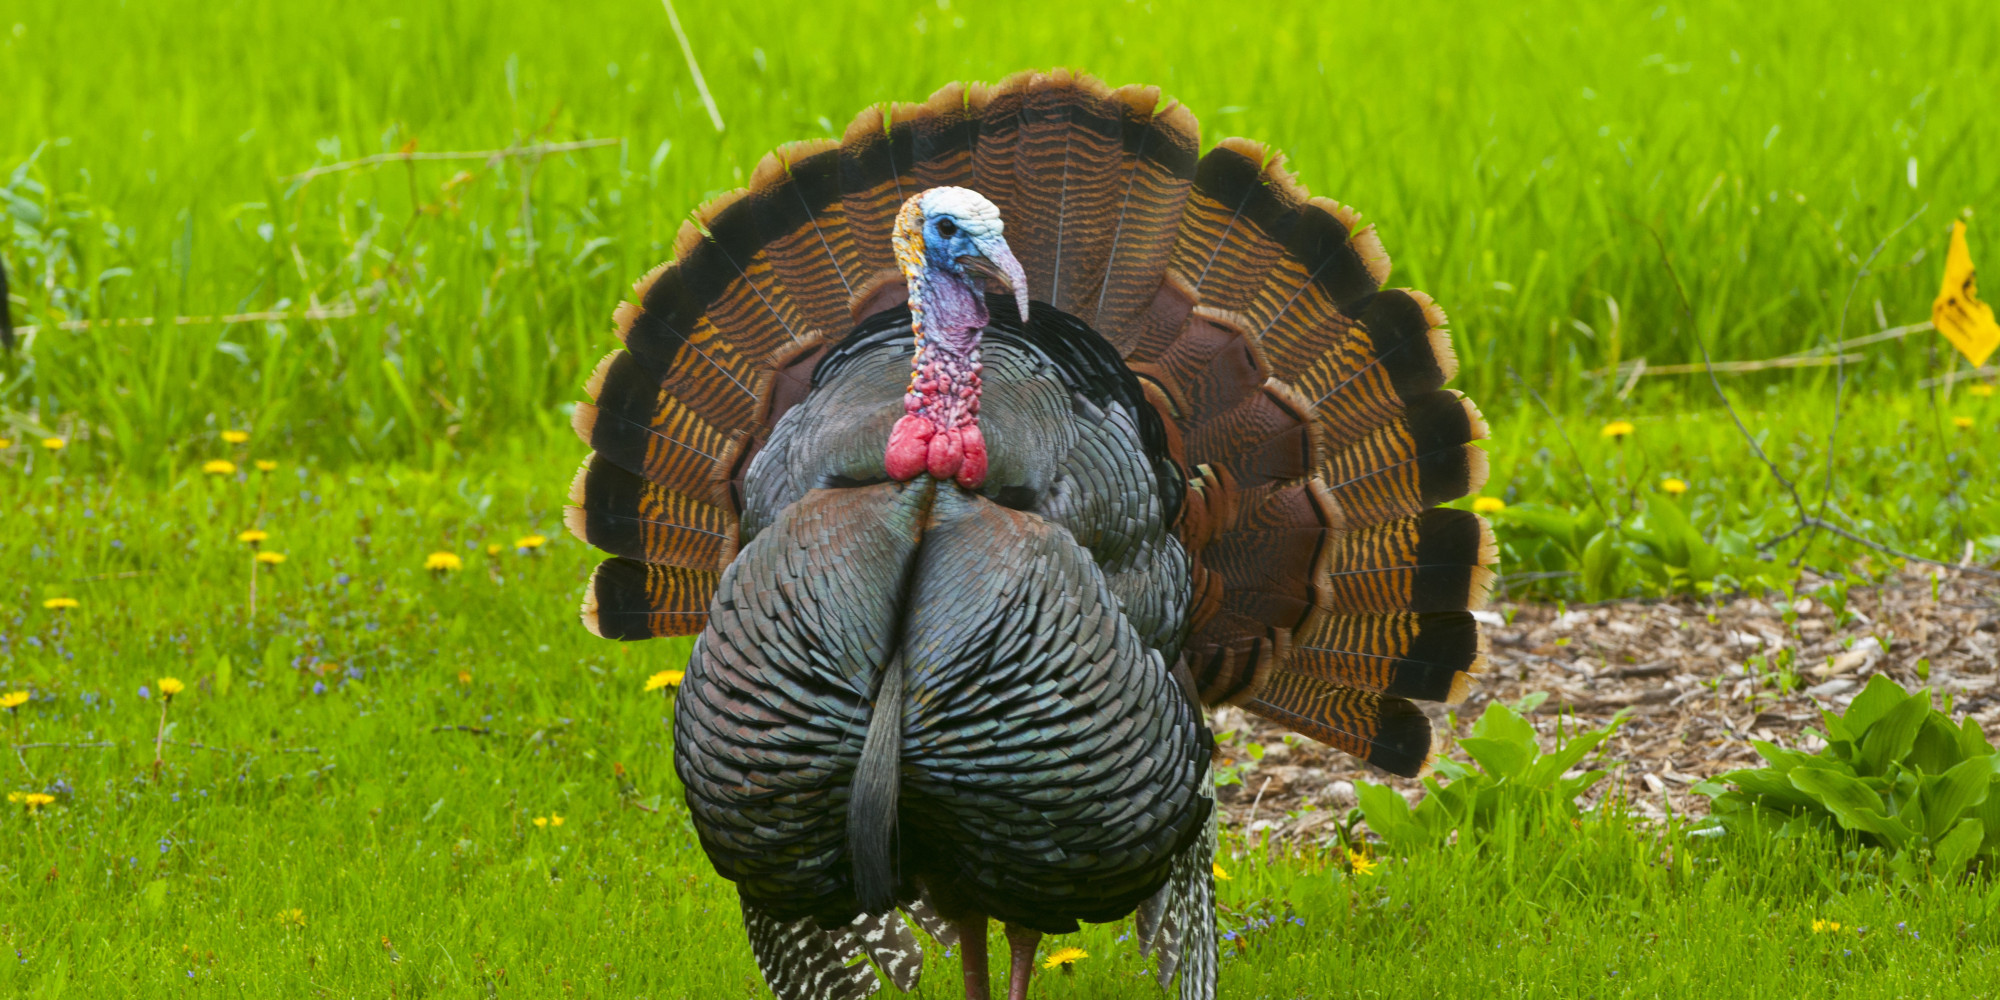 Photos Of Thanksgiving Turkey
 A Feast Ways To Support Humane Treatment Turkeys